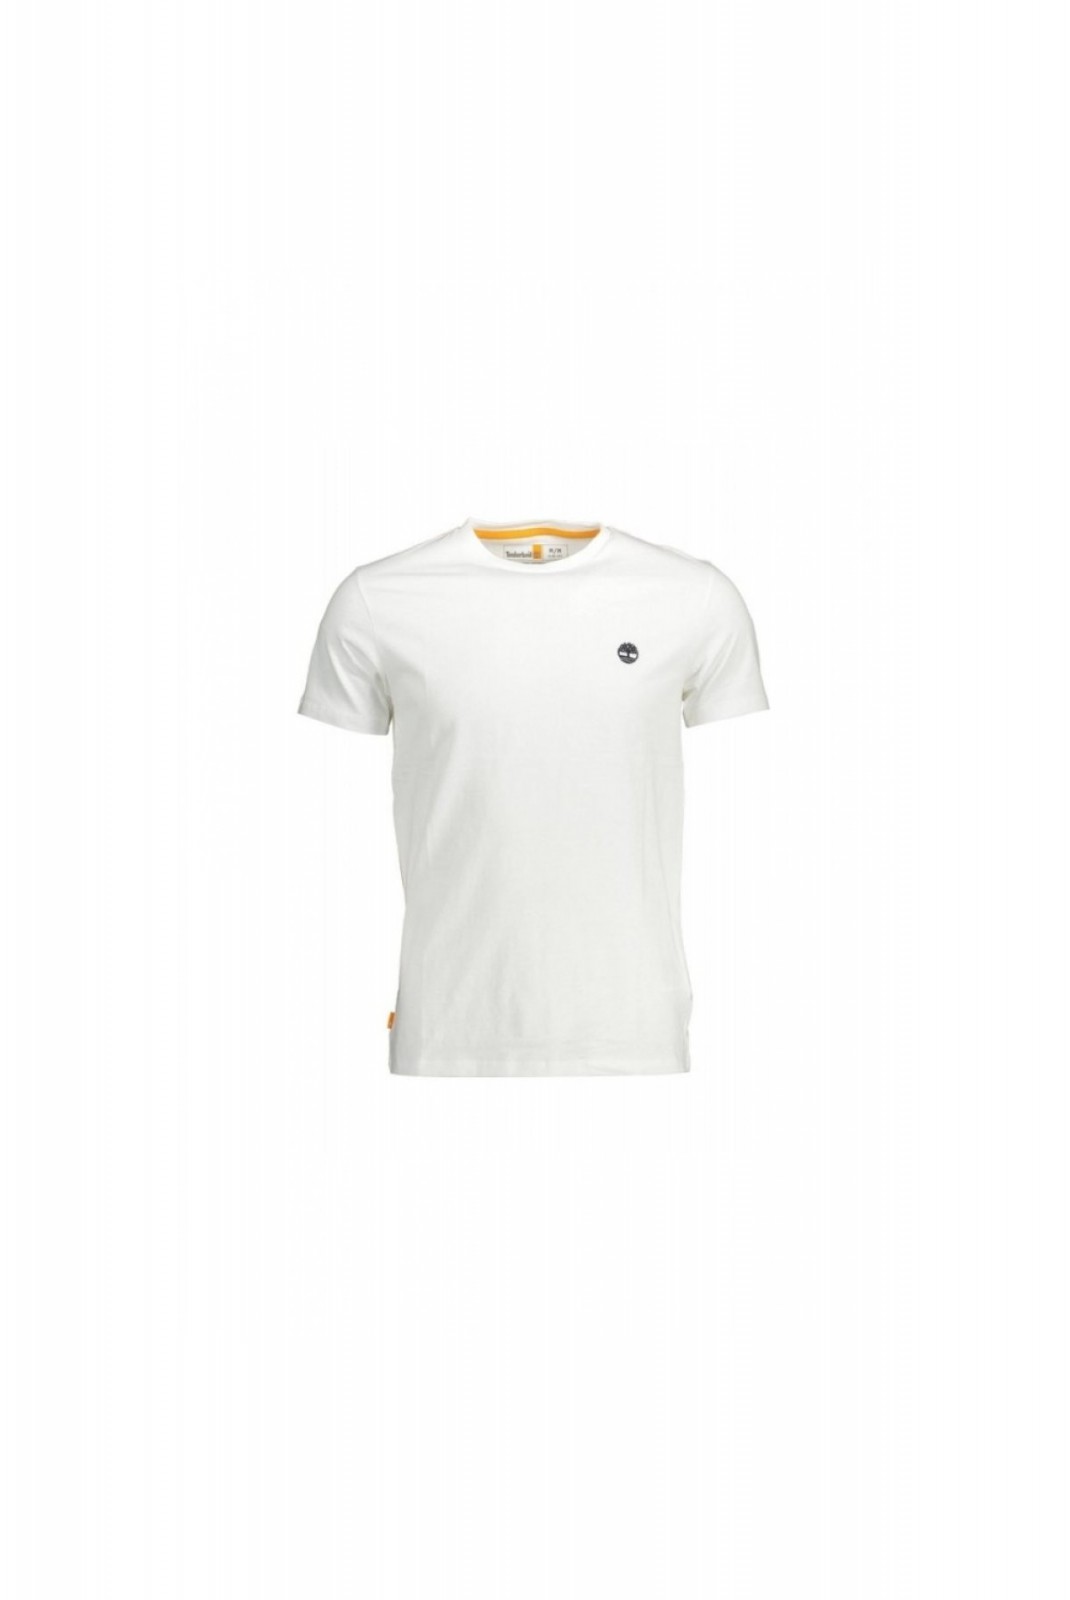 T-shirt MC - TIMBERLAND - TB0A2BR3_BIANCO_100 Timberland 100 bianco TB0A2BR3